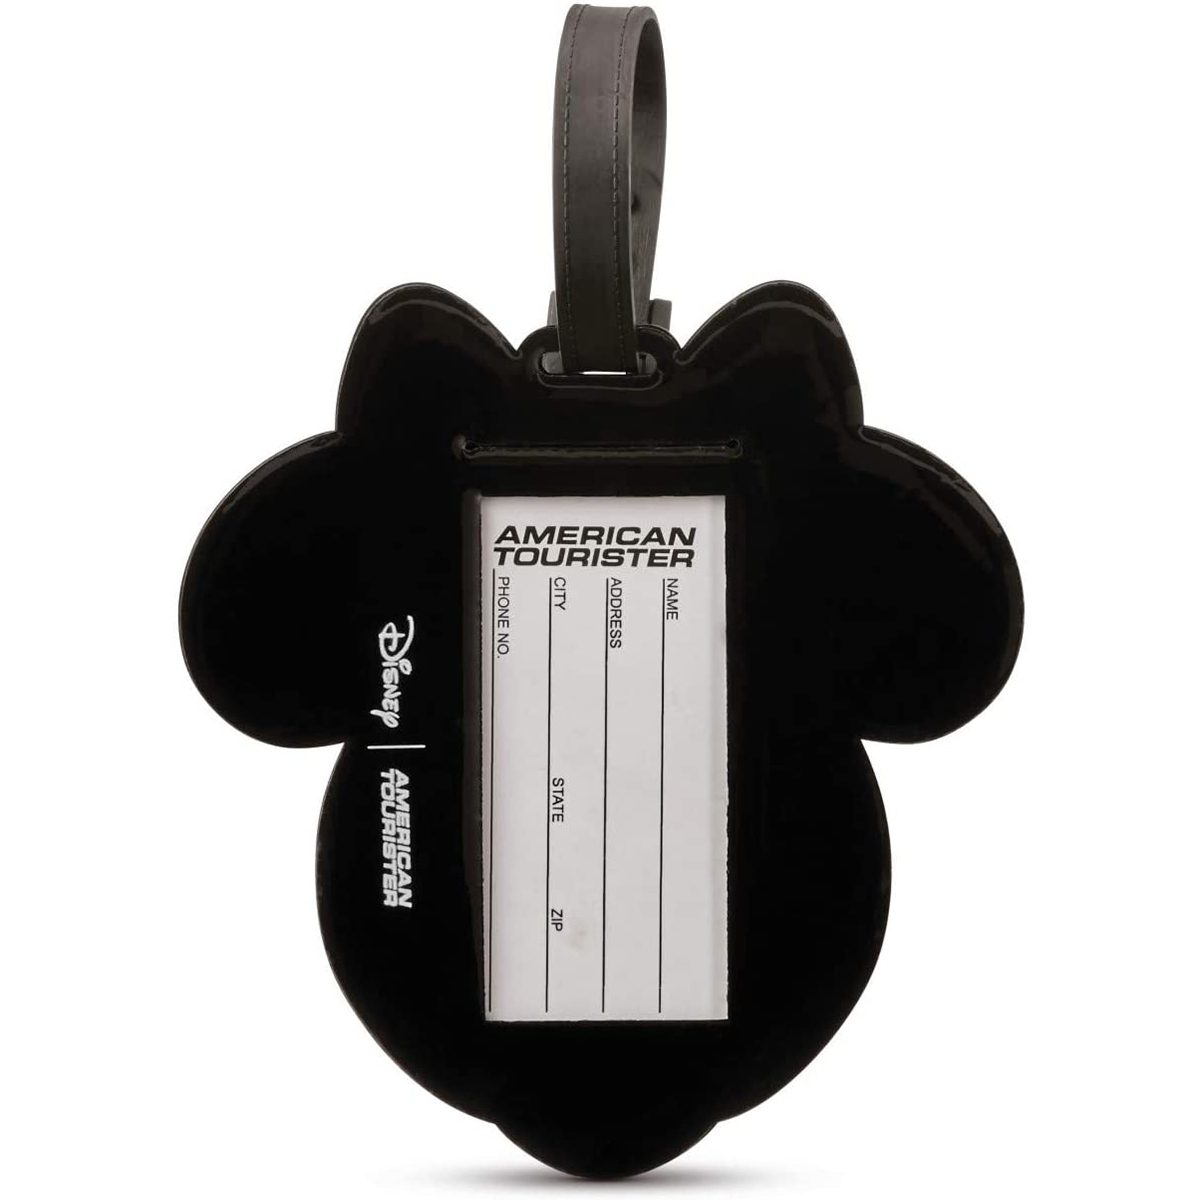 American Tourister(R) Disney Minnie Mouse Head ID Tag